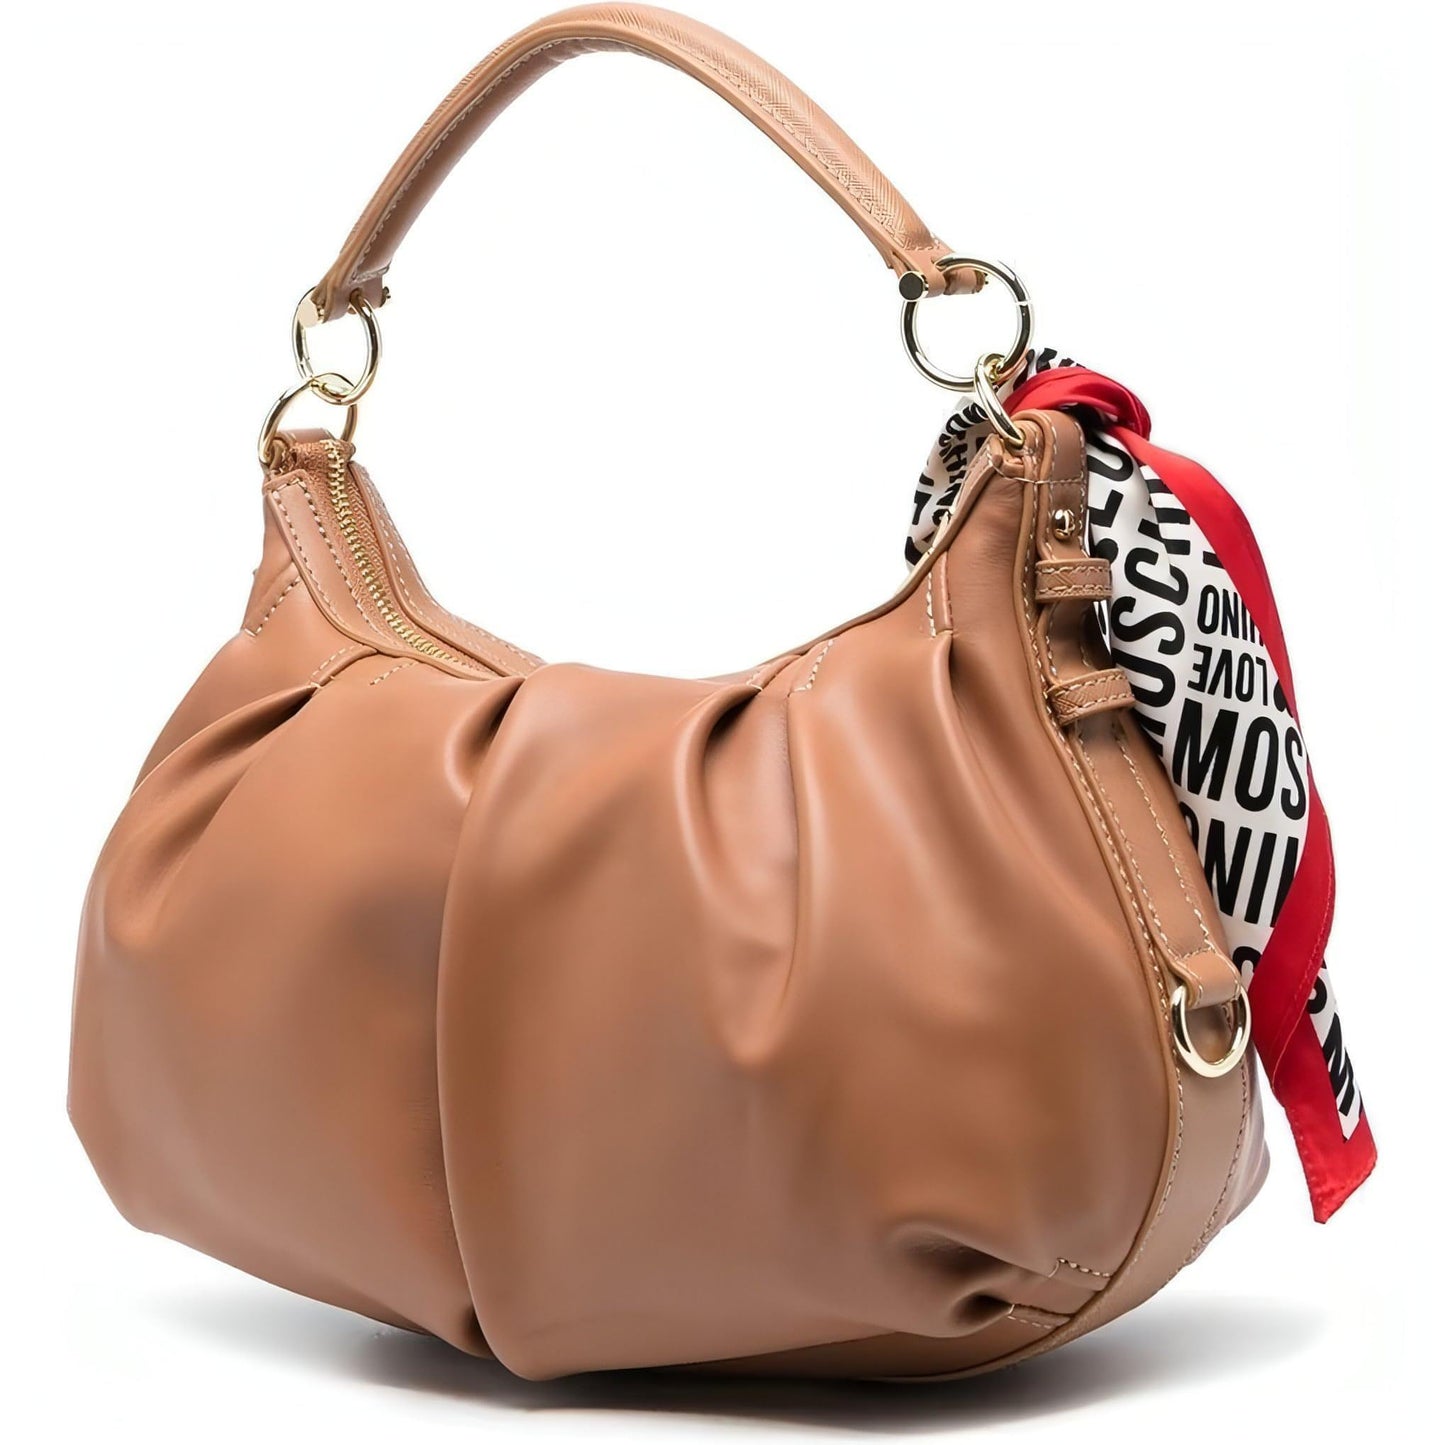 LOVE MOSCHINO moteriška ruda rankinė Top handle shoulder bag